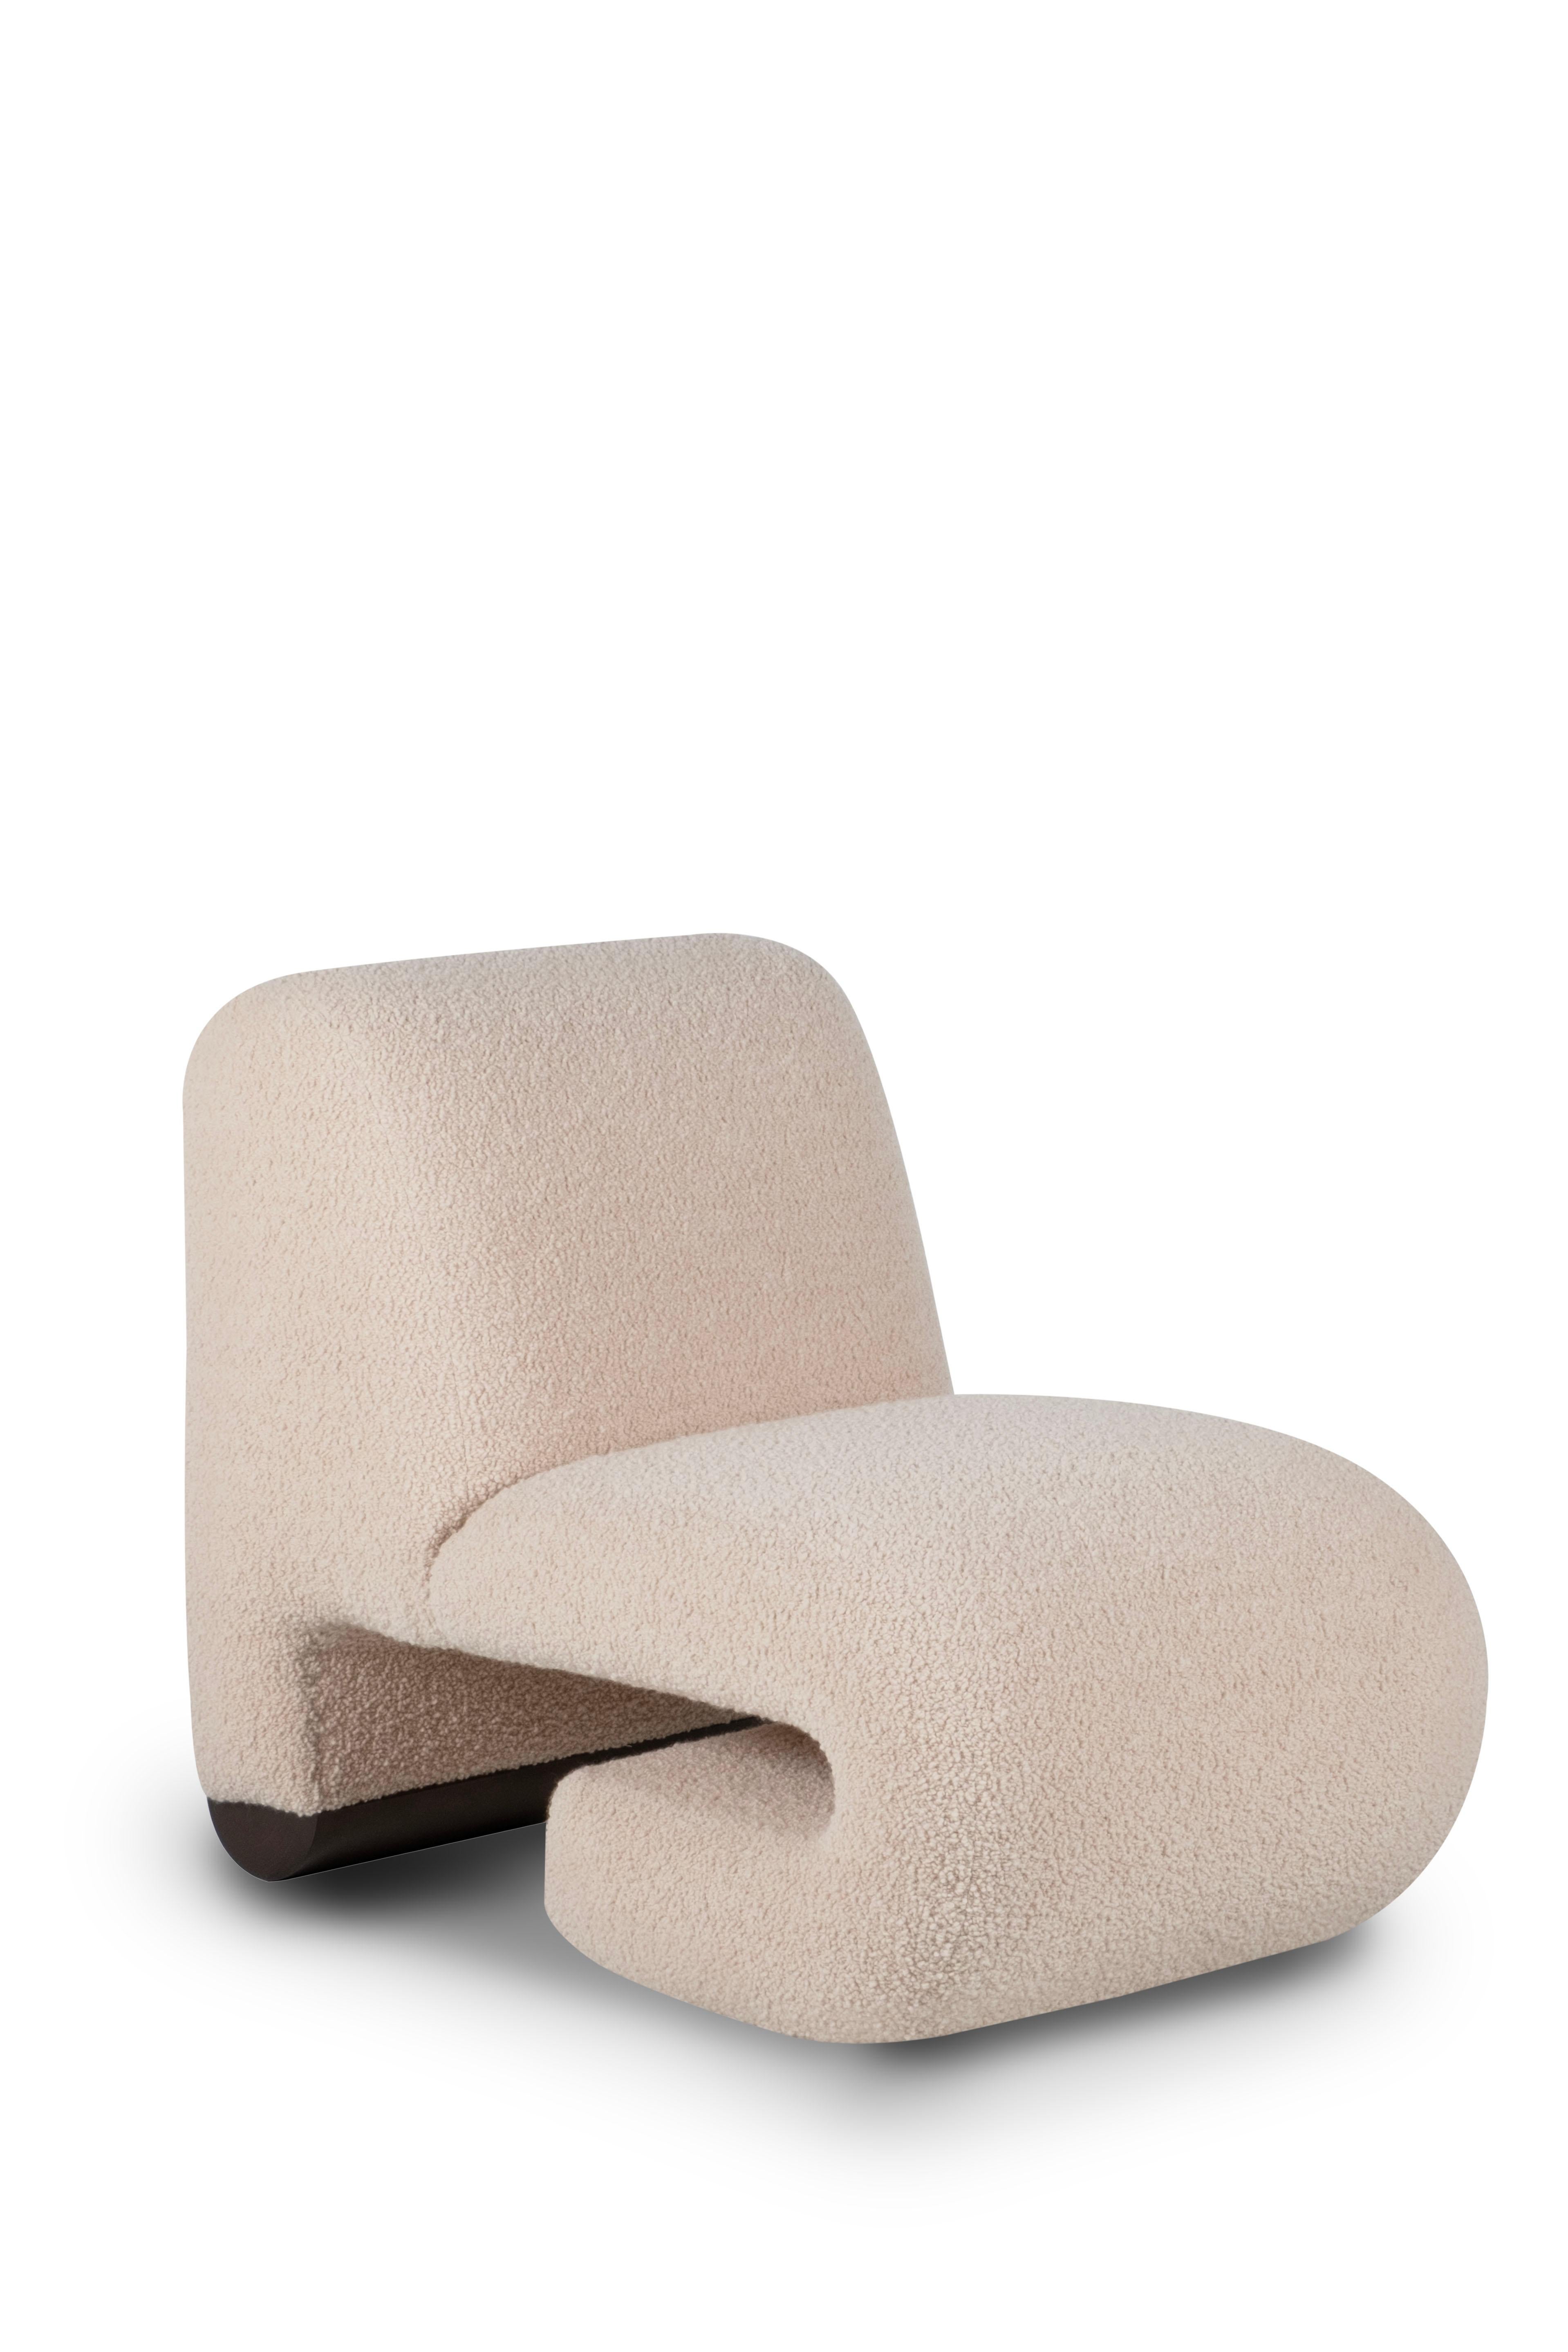 Portuguese Modern T50 Lounge Chair, Dedar Wool Bouclé, Handmade in Portugal by Greenapple For Sale